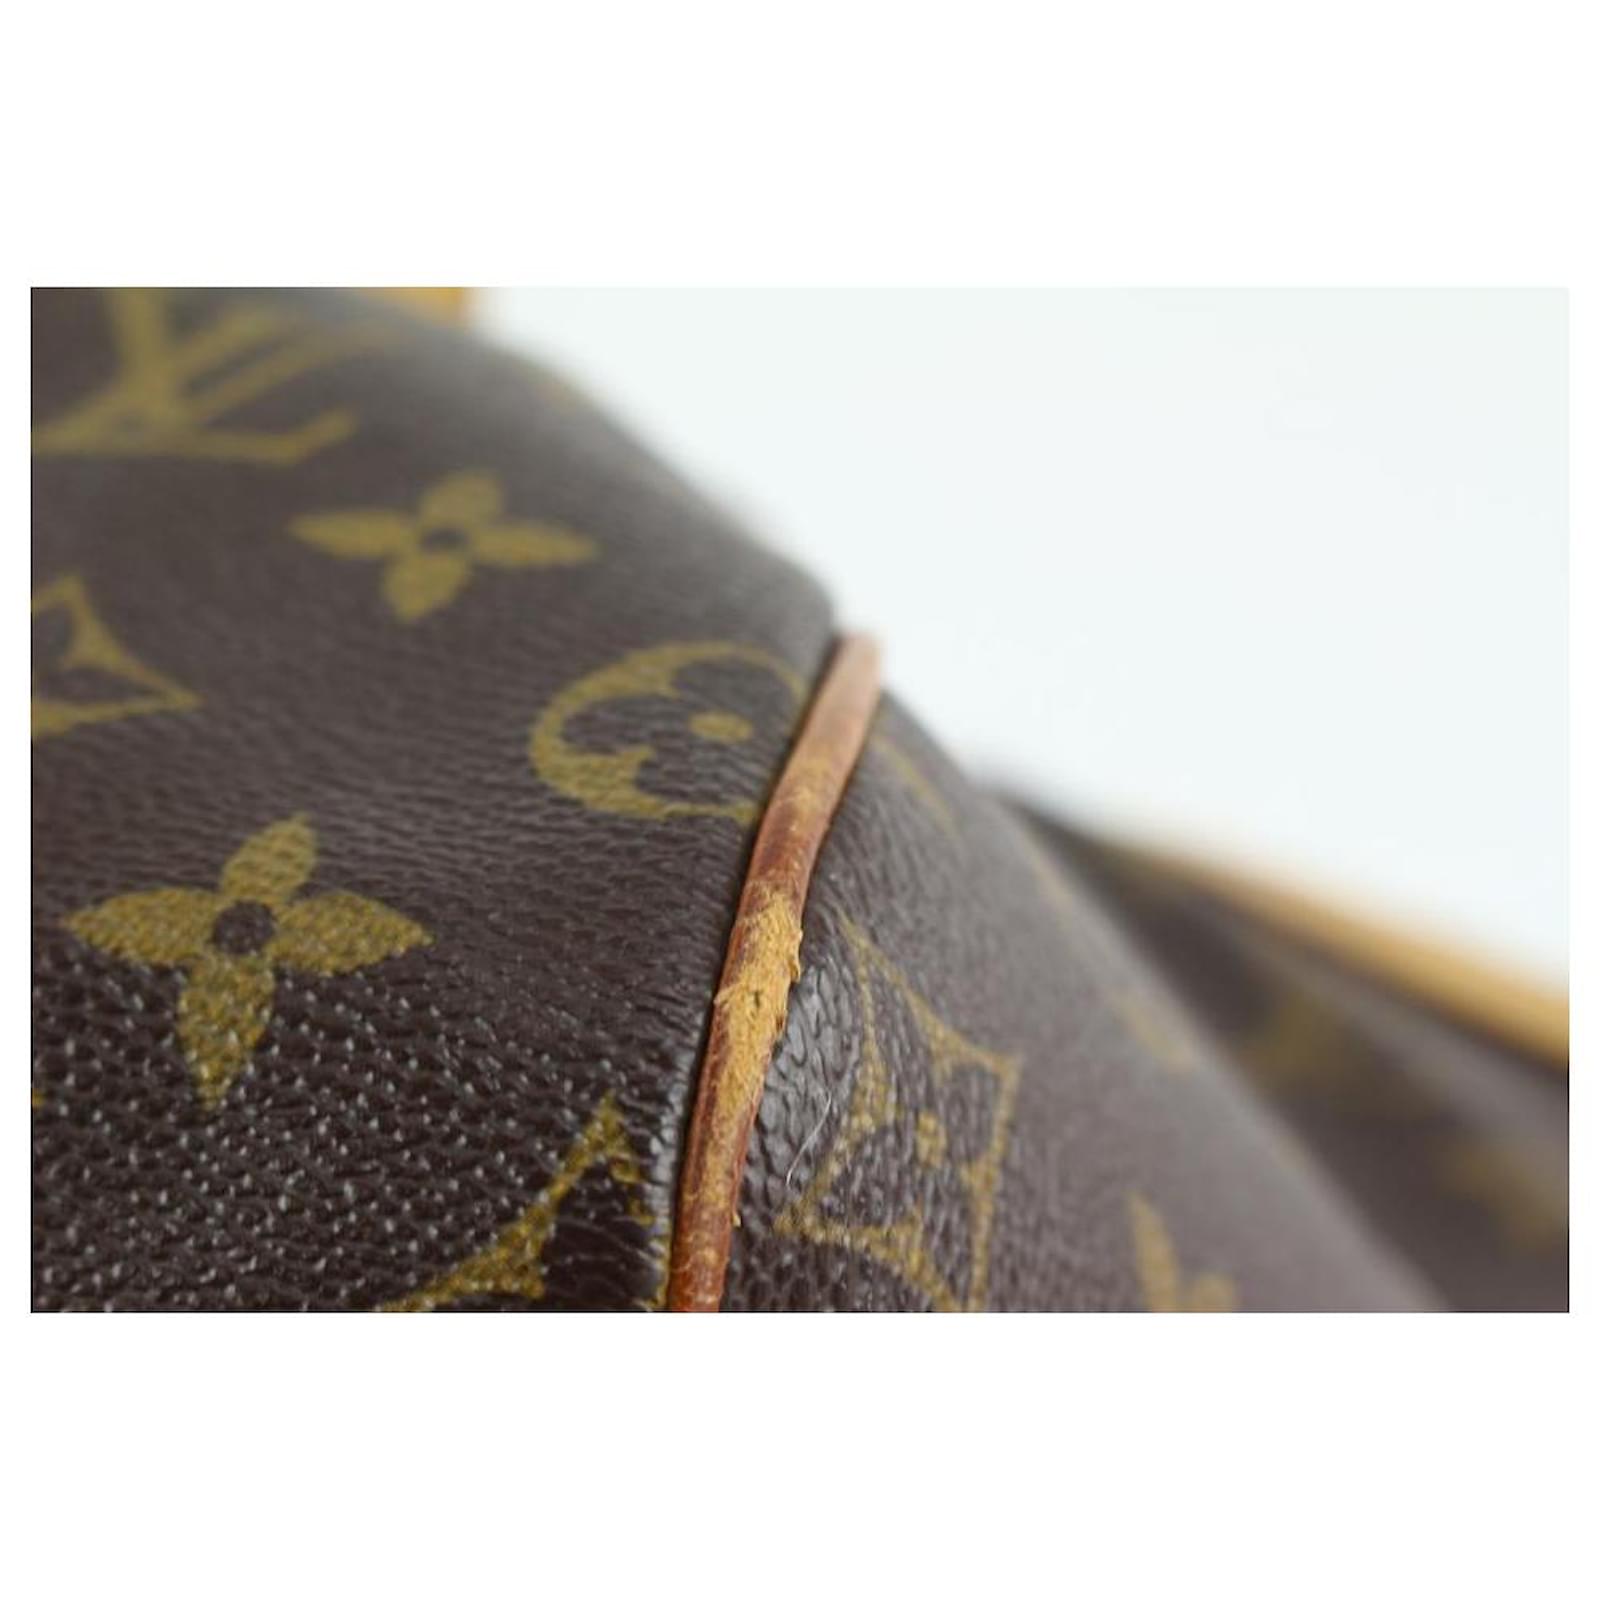 Louis Vuitton Monogram Canvas Tivoli GM Bag (Discontinued)